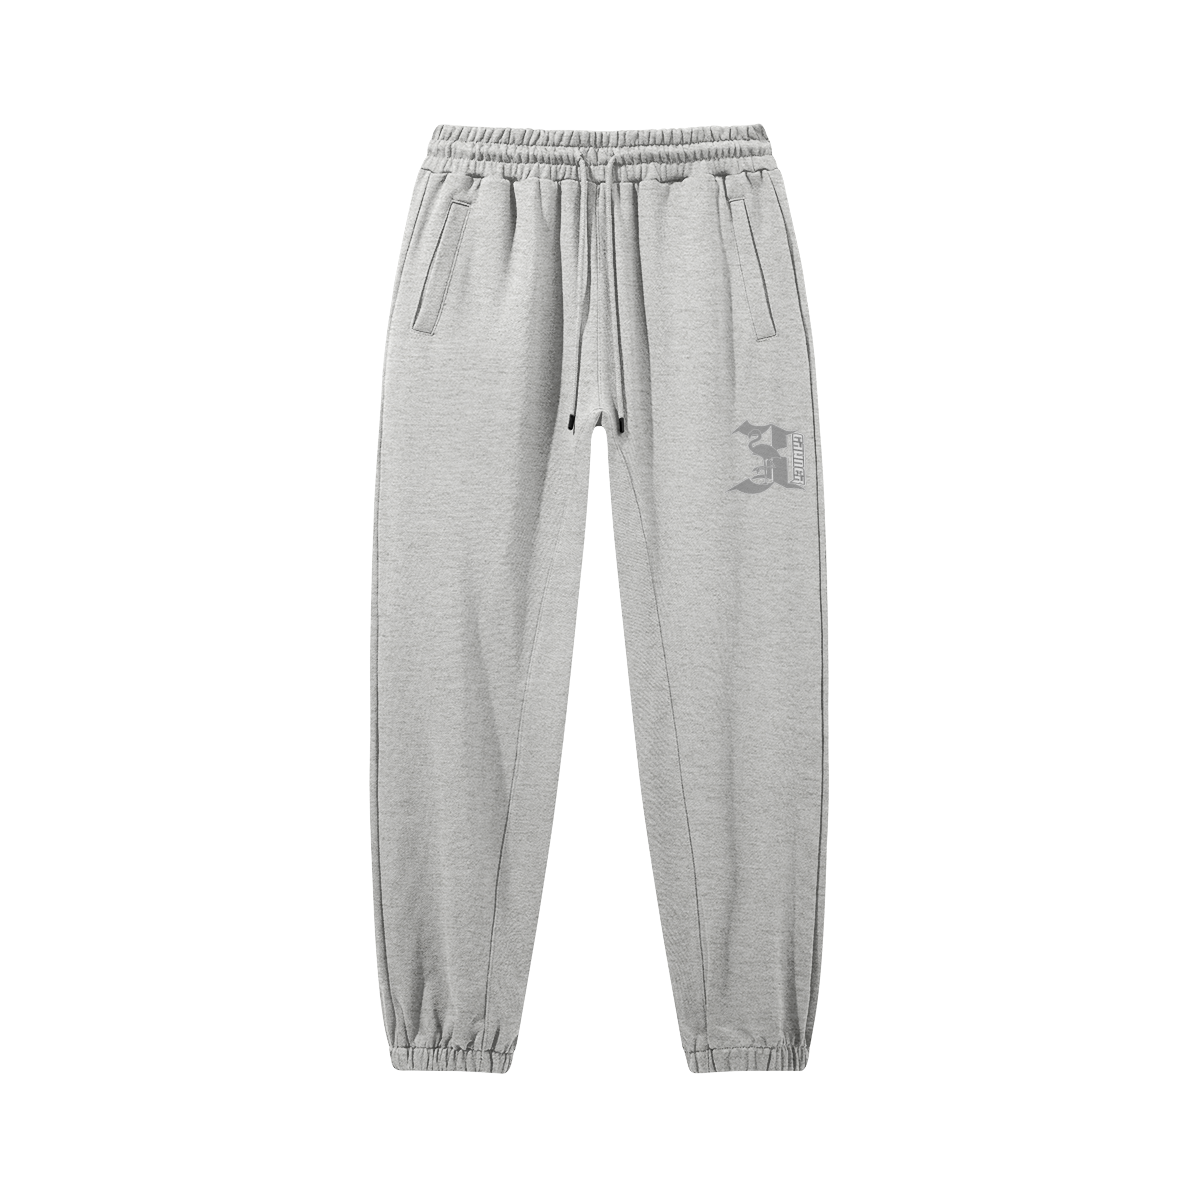 grey sweatpants – Gawner